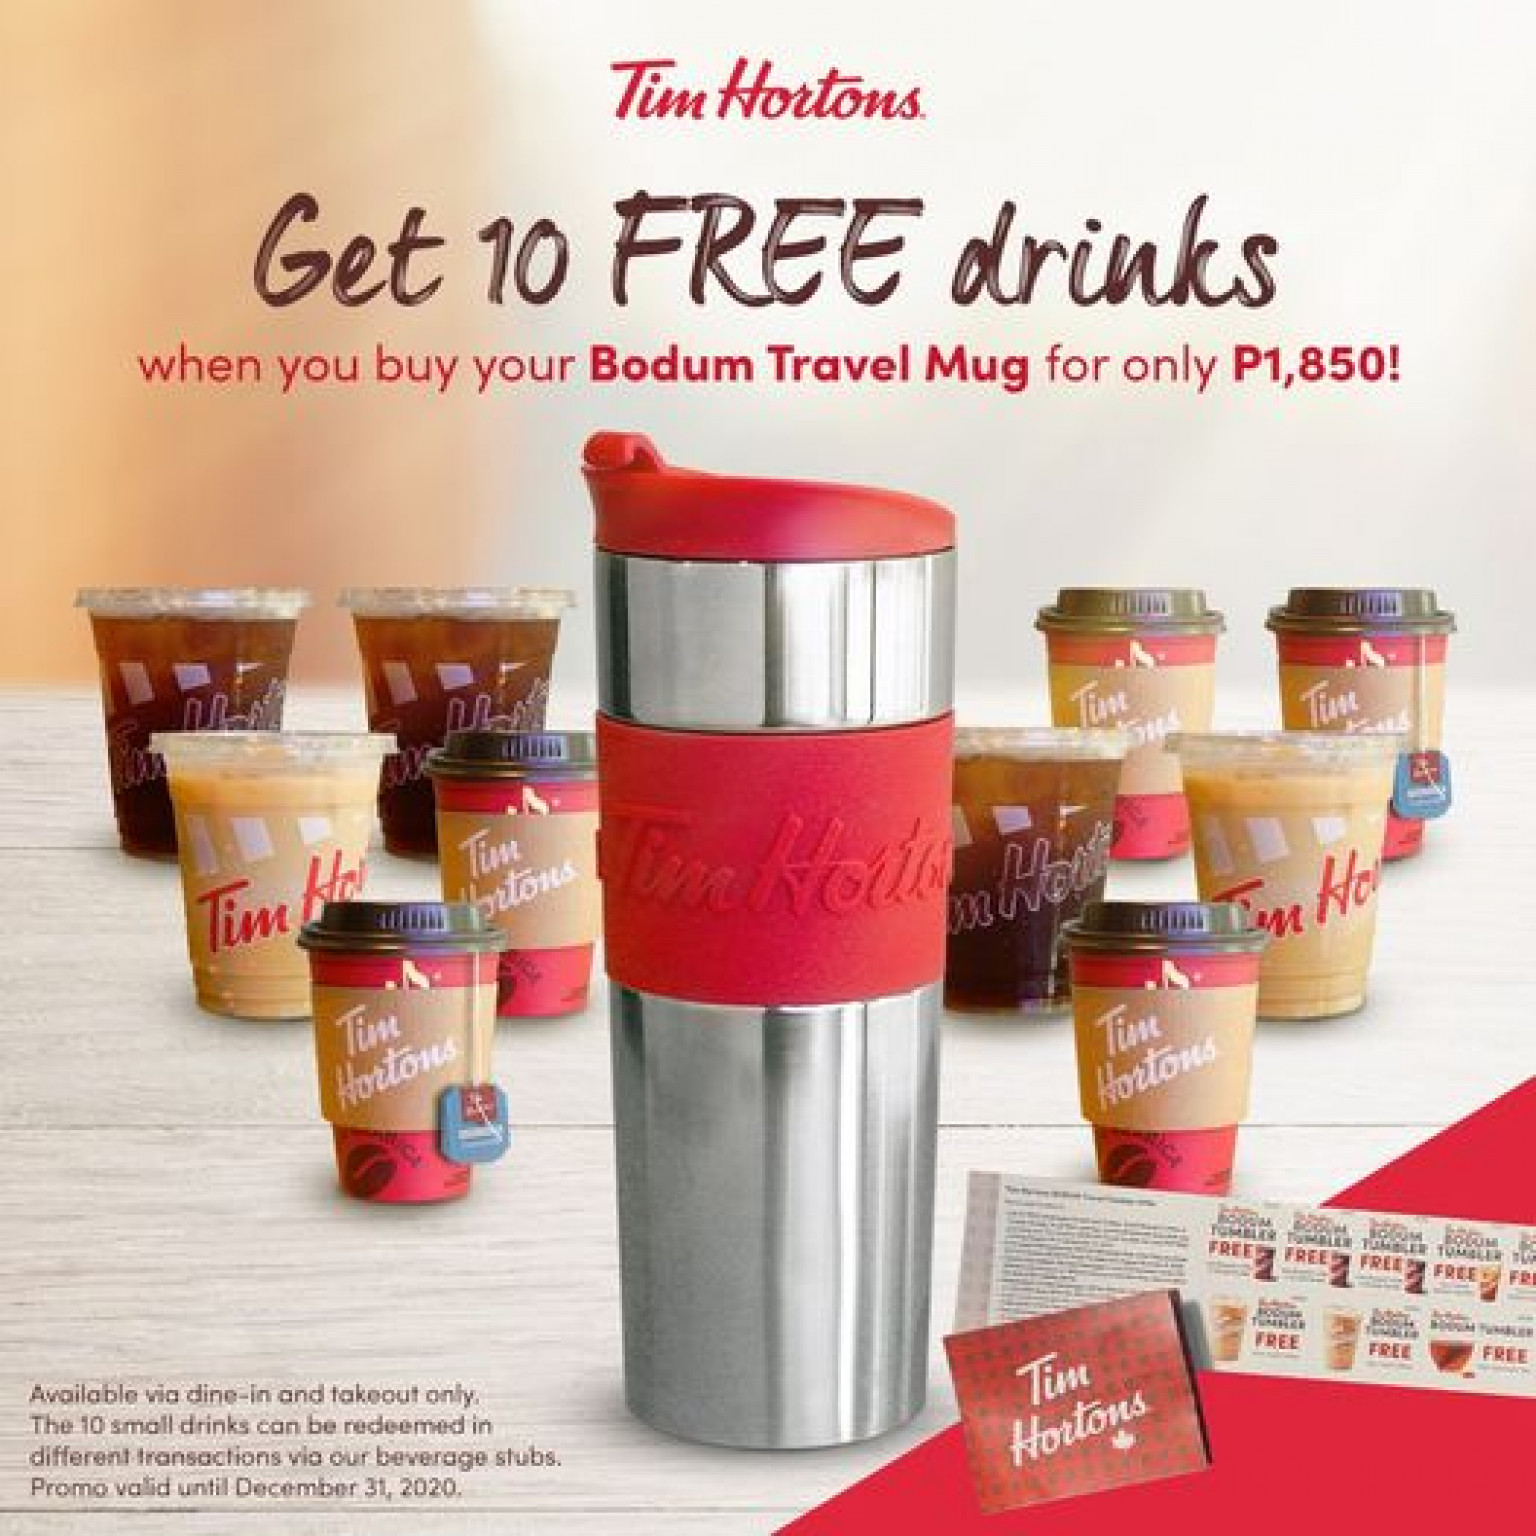 Tim Hortons Bodum Travel Mug Comes with 10 FREE Drinks